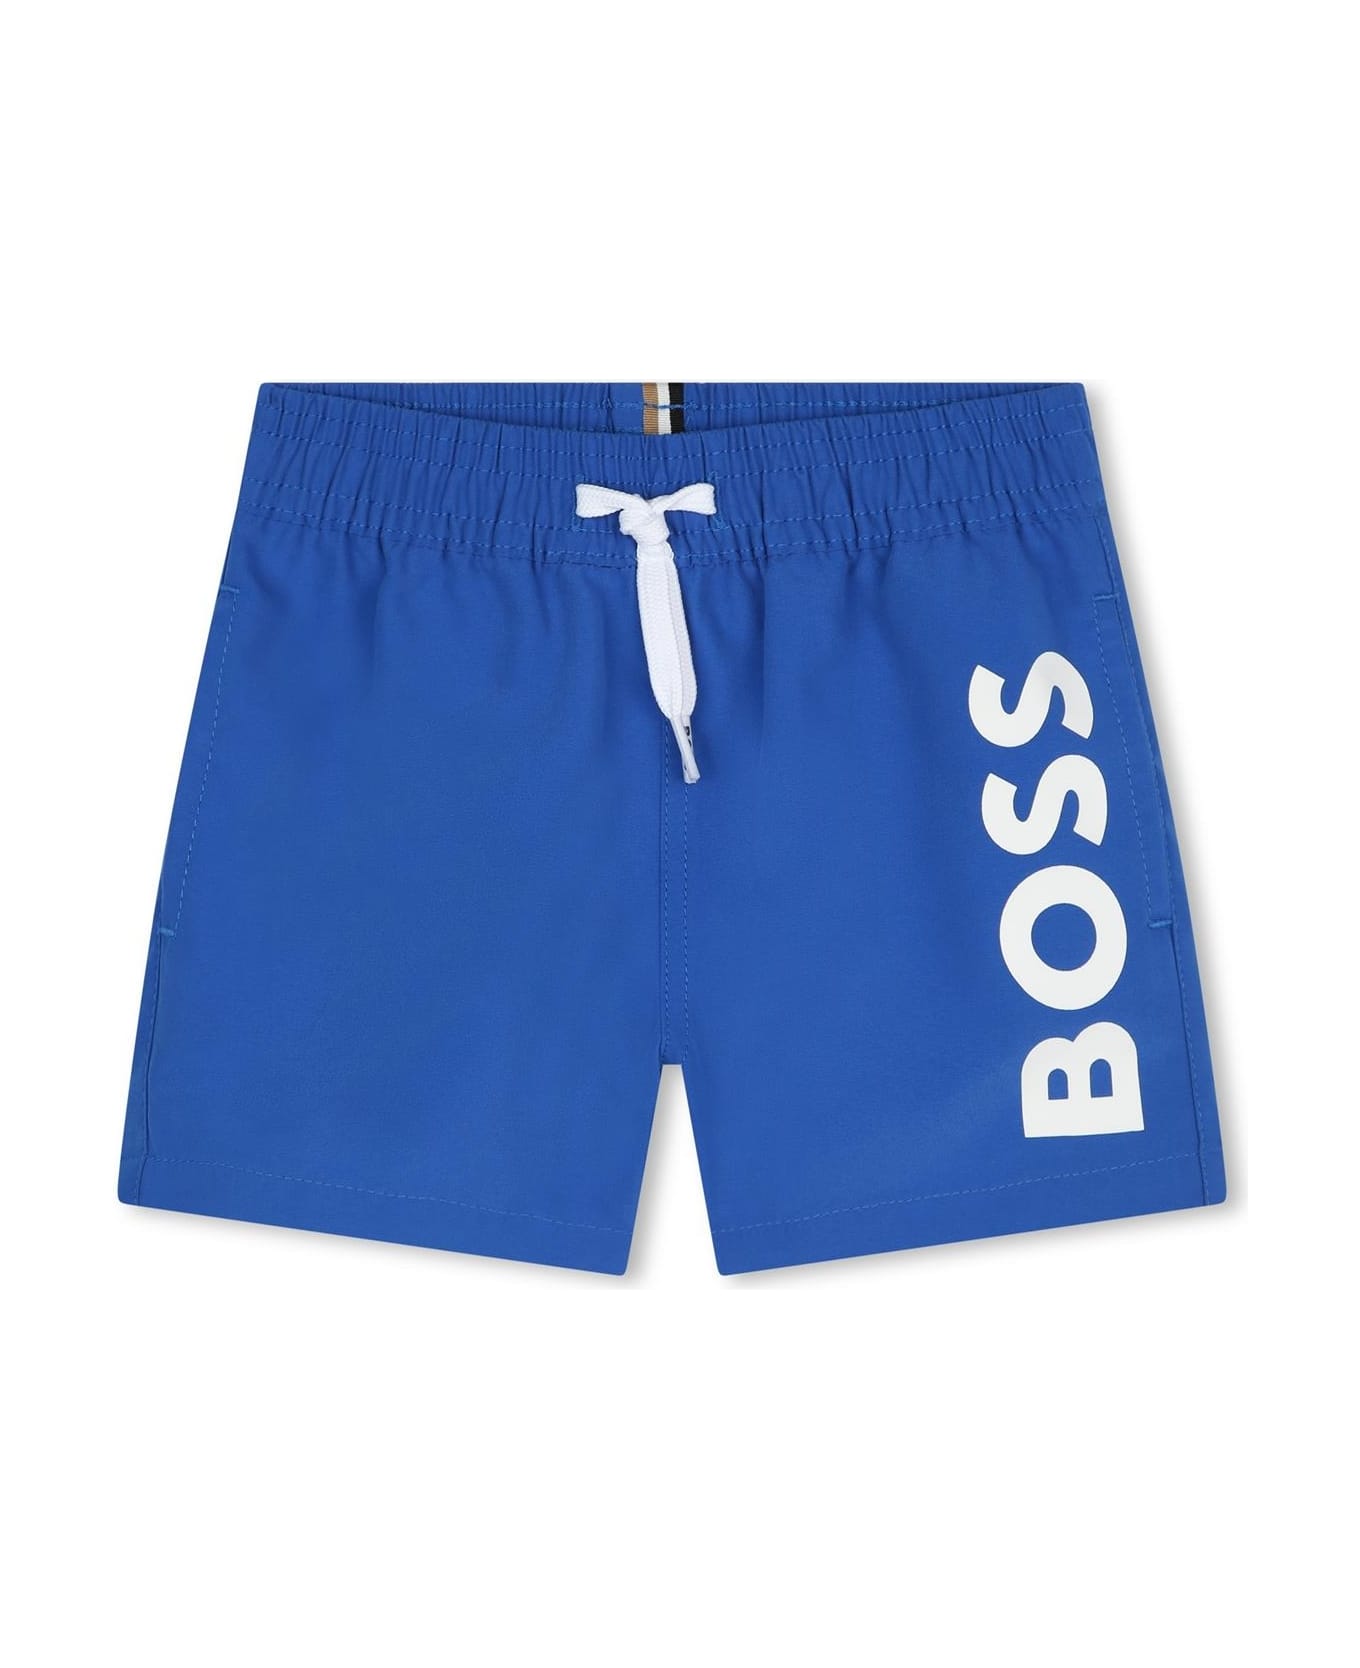 Hugo Boss Printed Swimsuit - Blue 水着